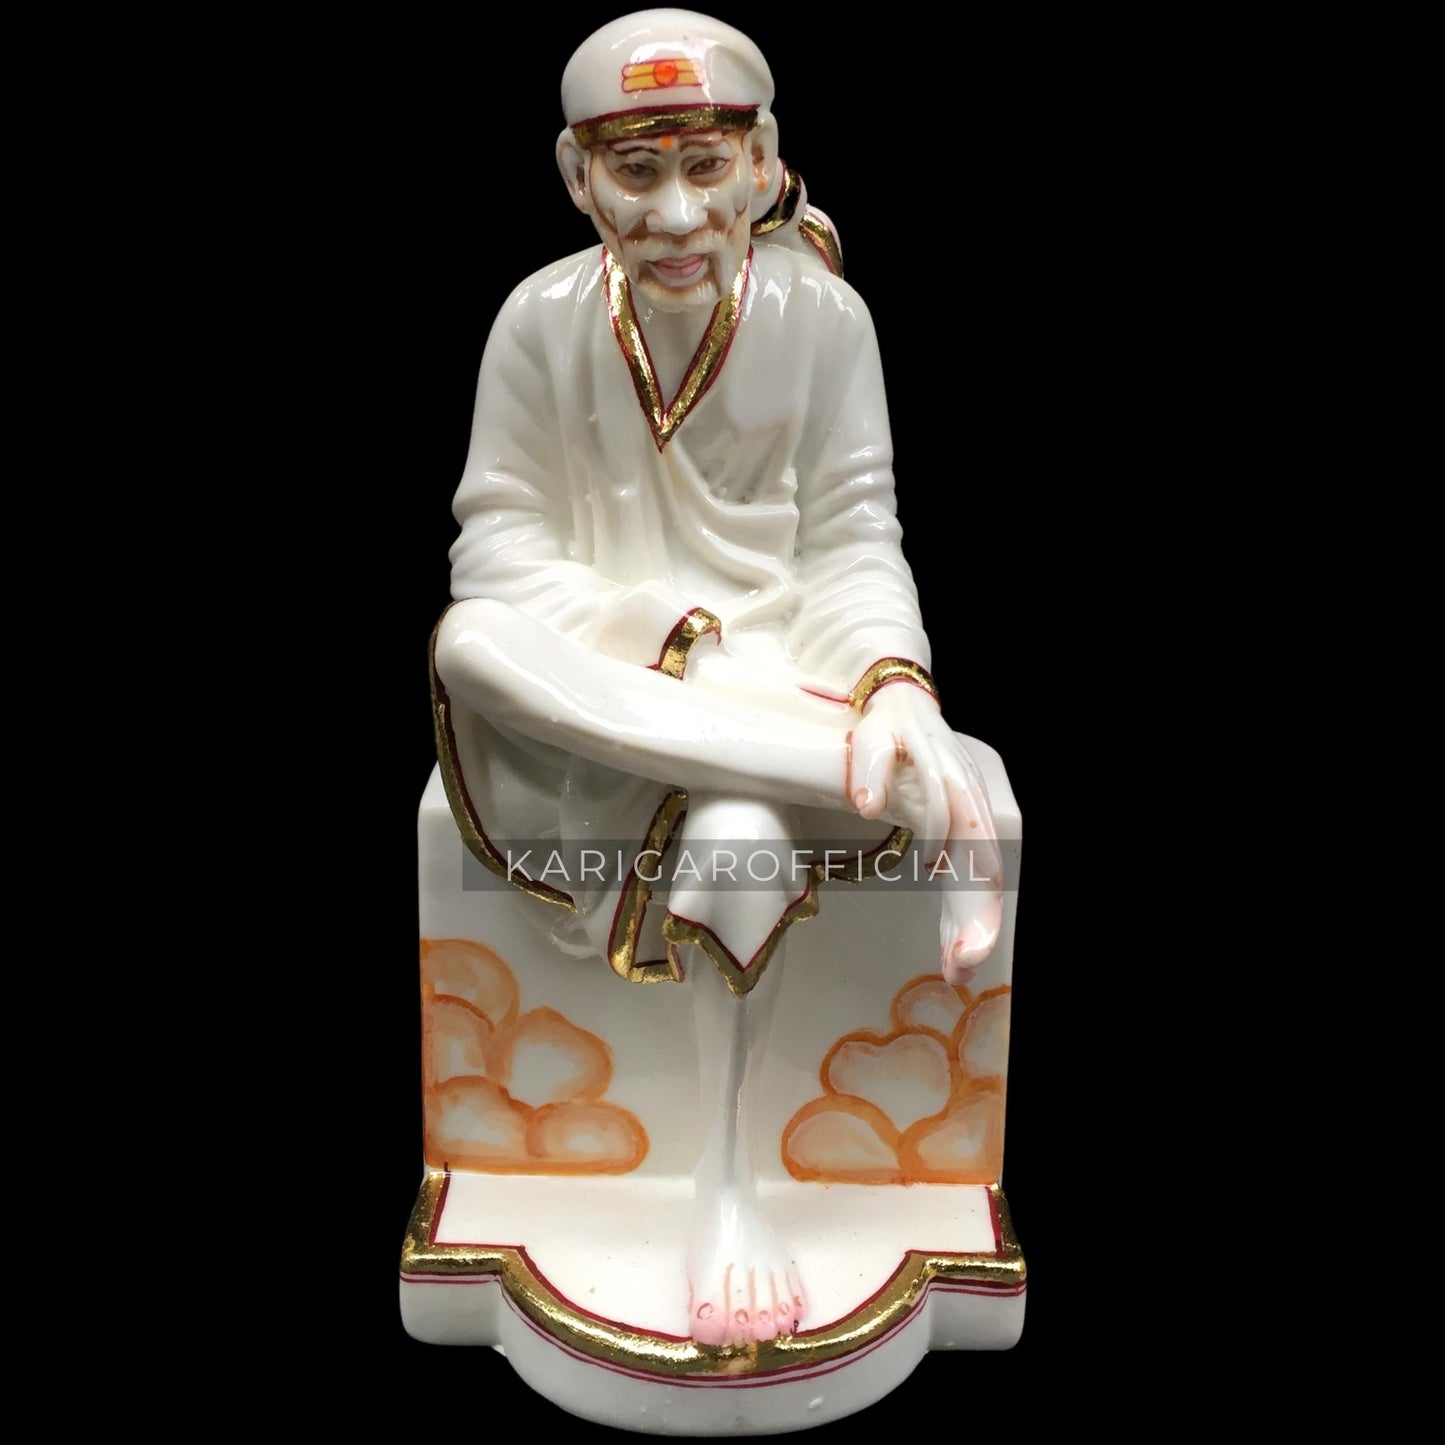 Sai baba Statue, White Marble Satya Sai Murti, Large 9 inches Sai baba idol, The Selfless God Hindu Divine Sai baba figurine, Shirdi Sai Baba Sculpture, Sri DattaGuru Home Temple Housewarming Gifts